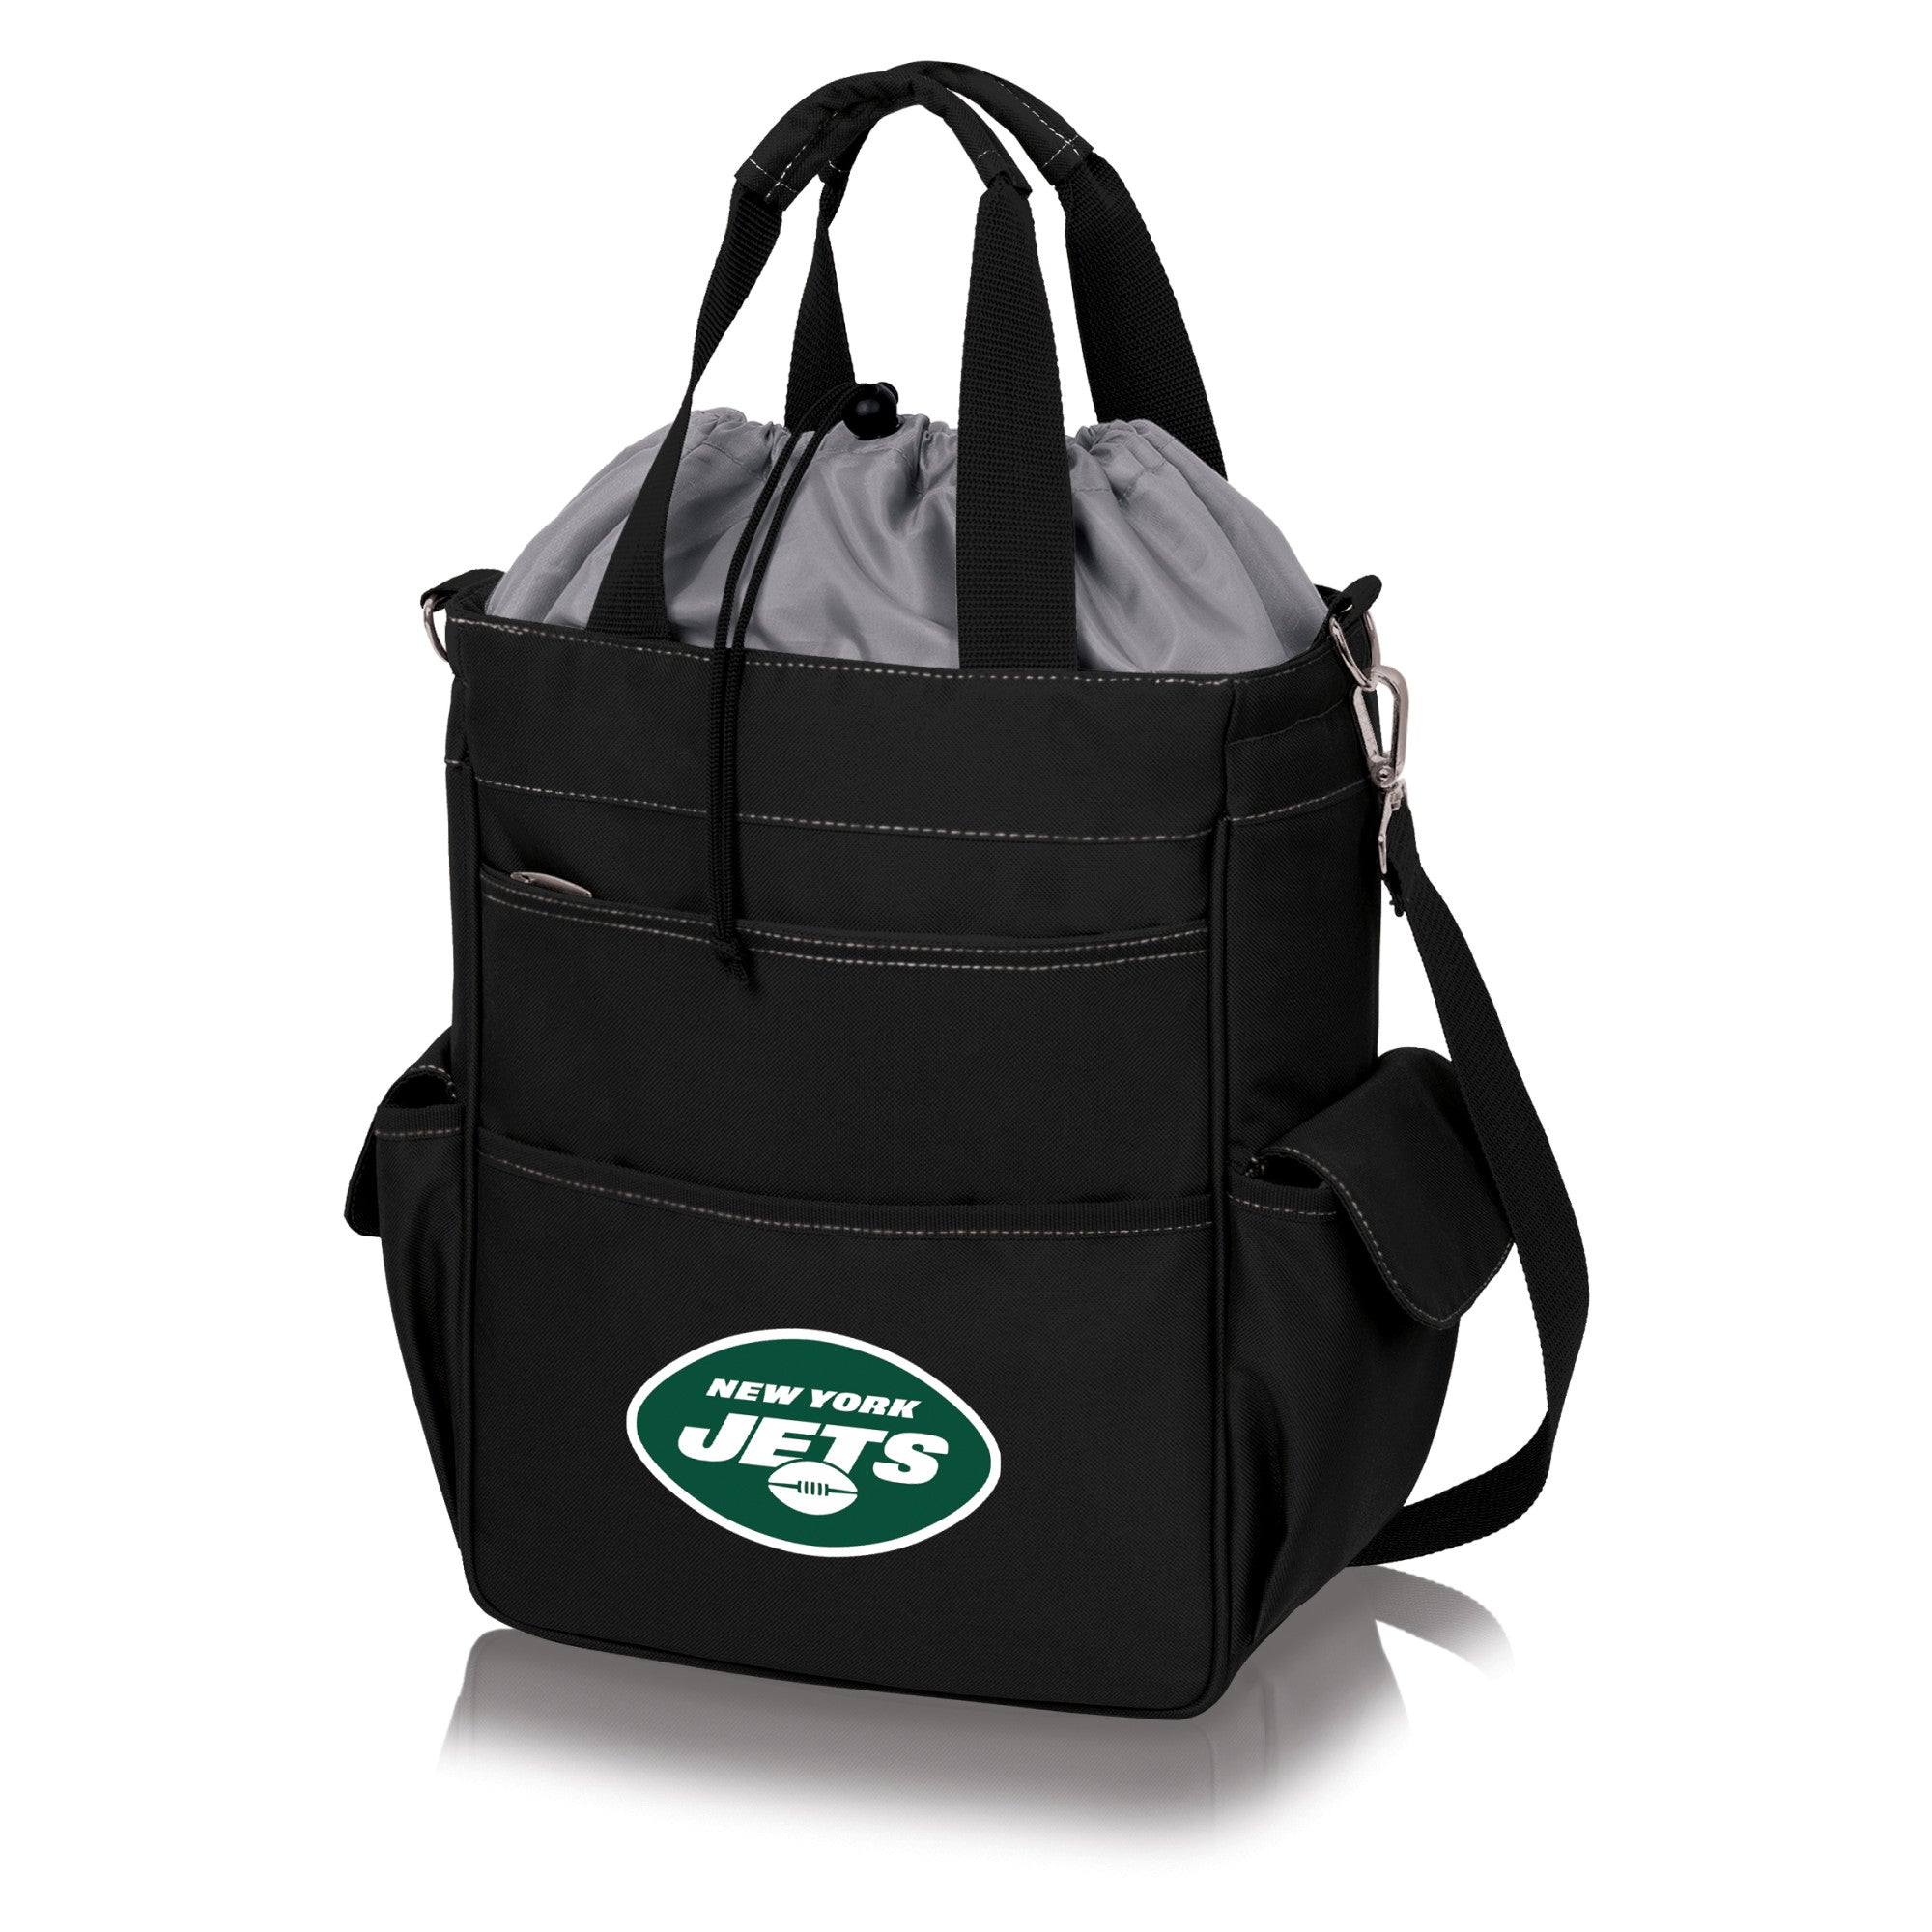 New York Jets - Activo Cooler Tote Bag